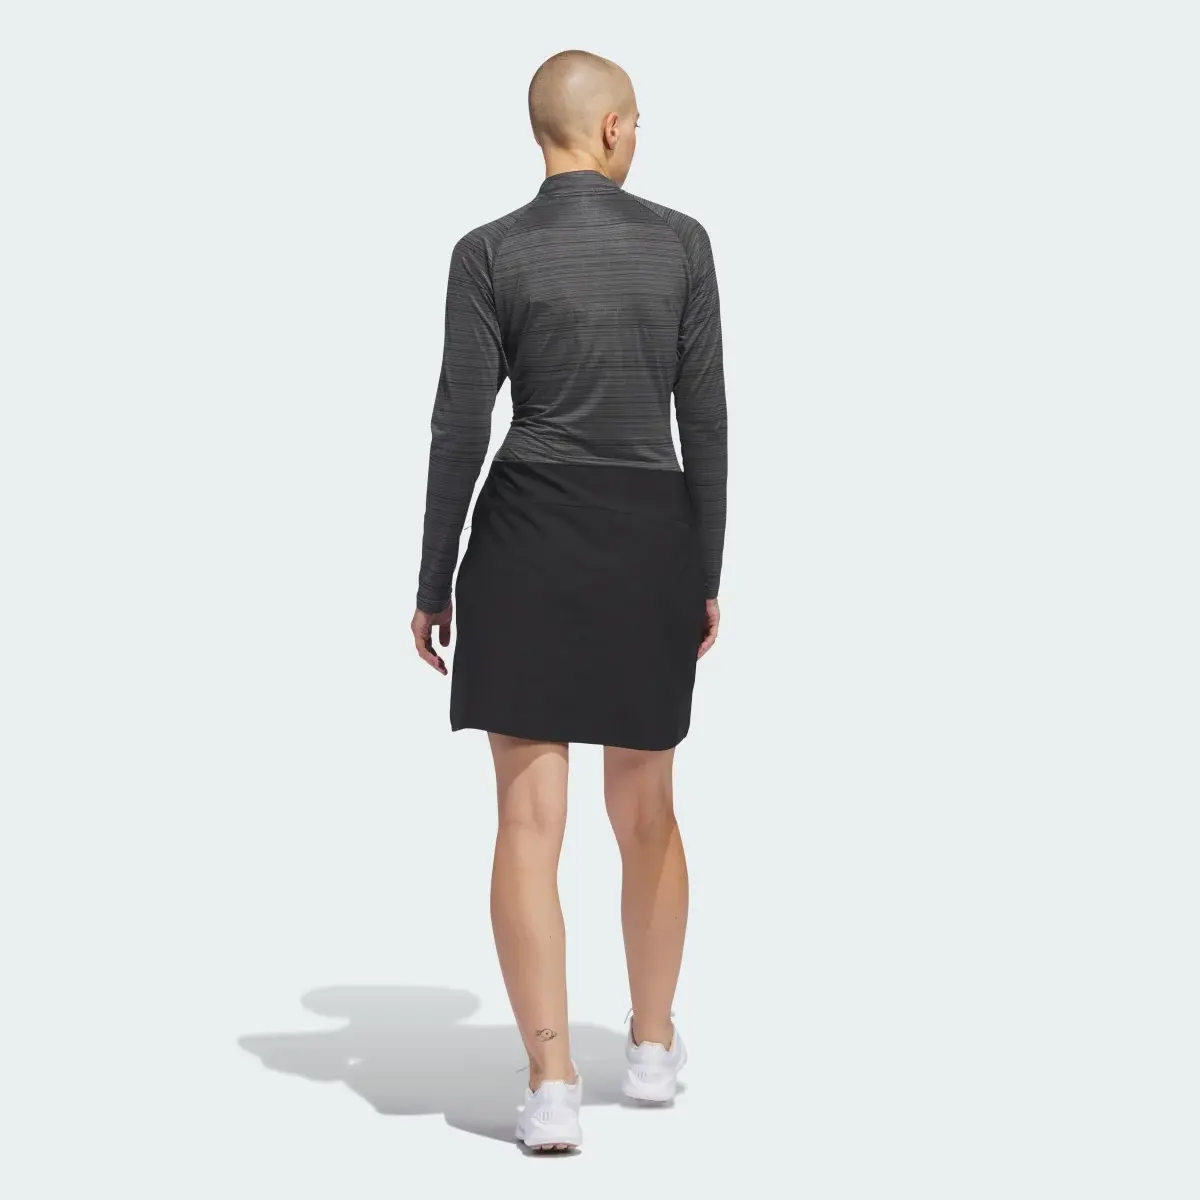 Adidas Ultimate365 Long Sleeve Dress. 3